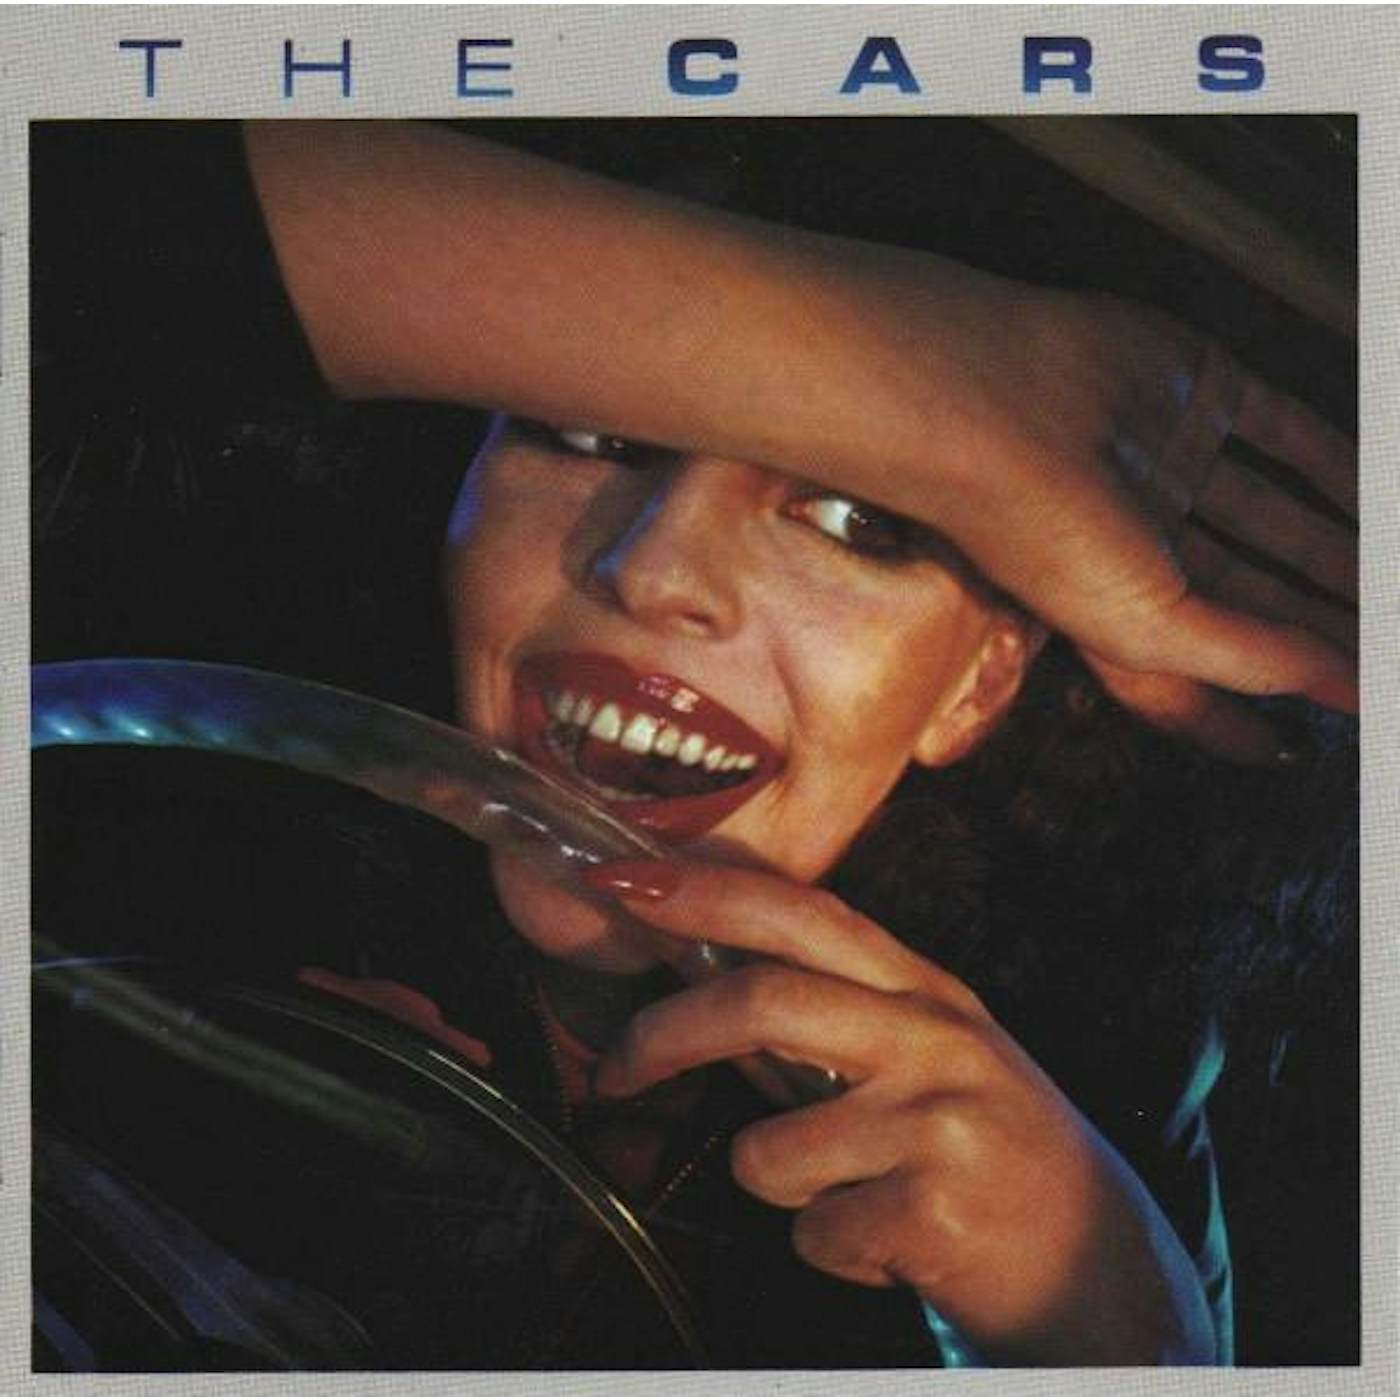 The Cars CD